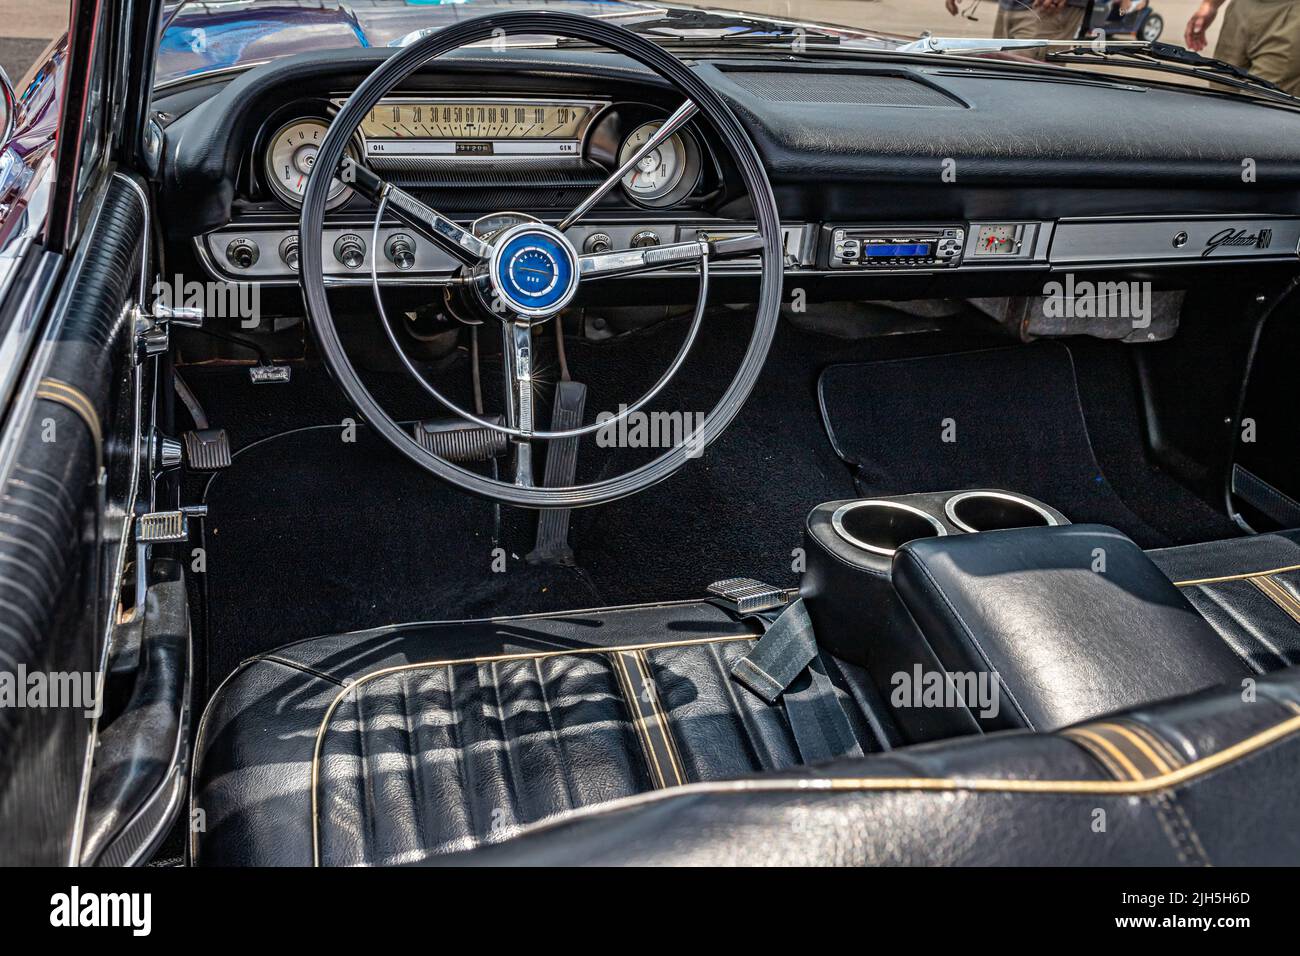 Lebanon, TN - May 14, 2022: Interior view of a 1964 Ford Galaxie 500 Convertible at a local car show. Stock Photo